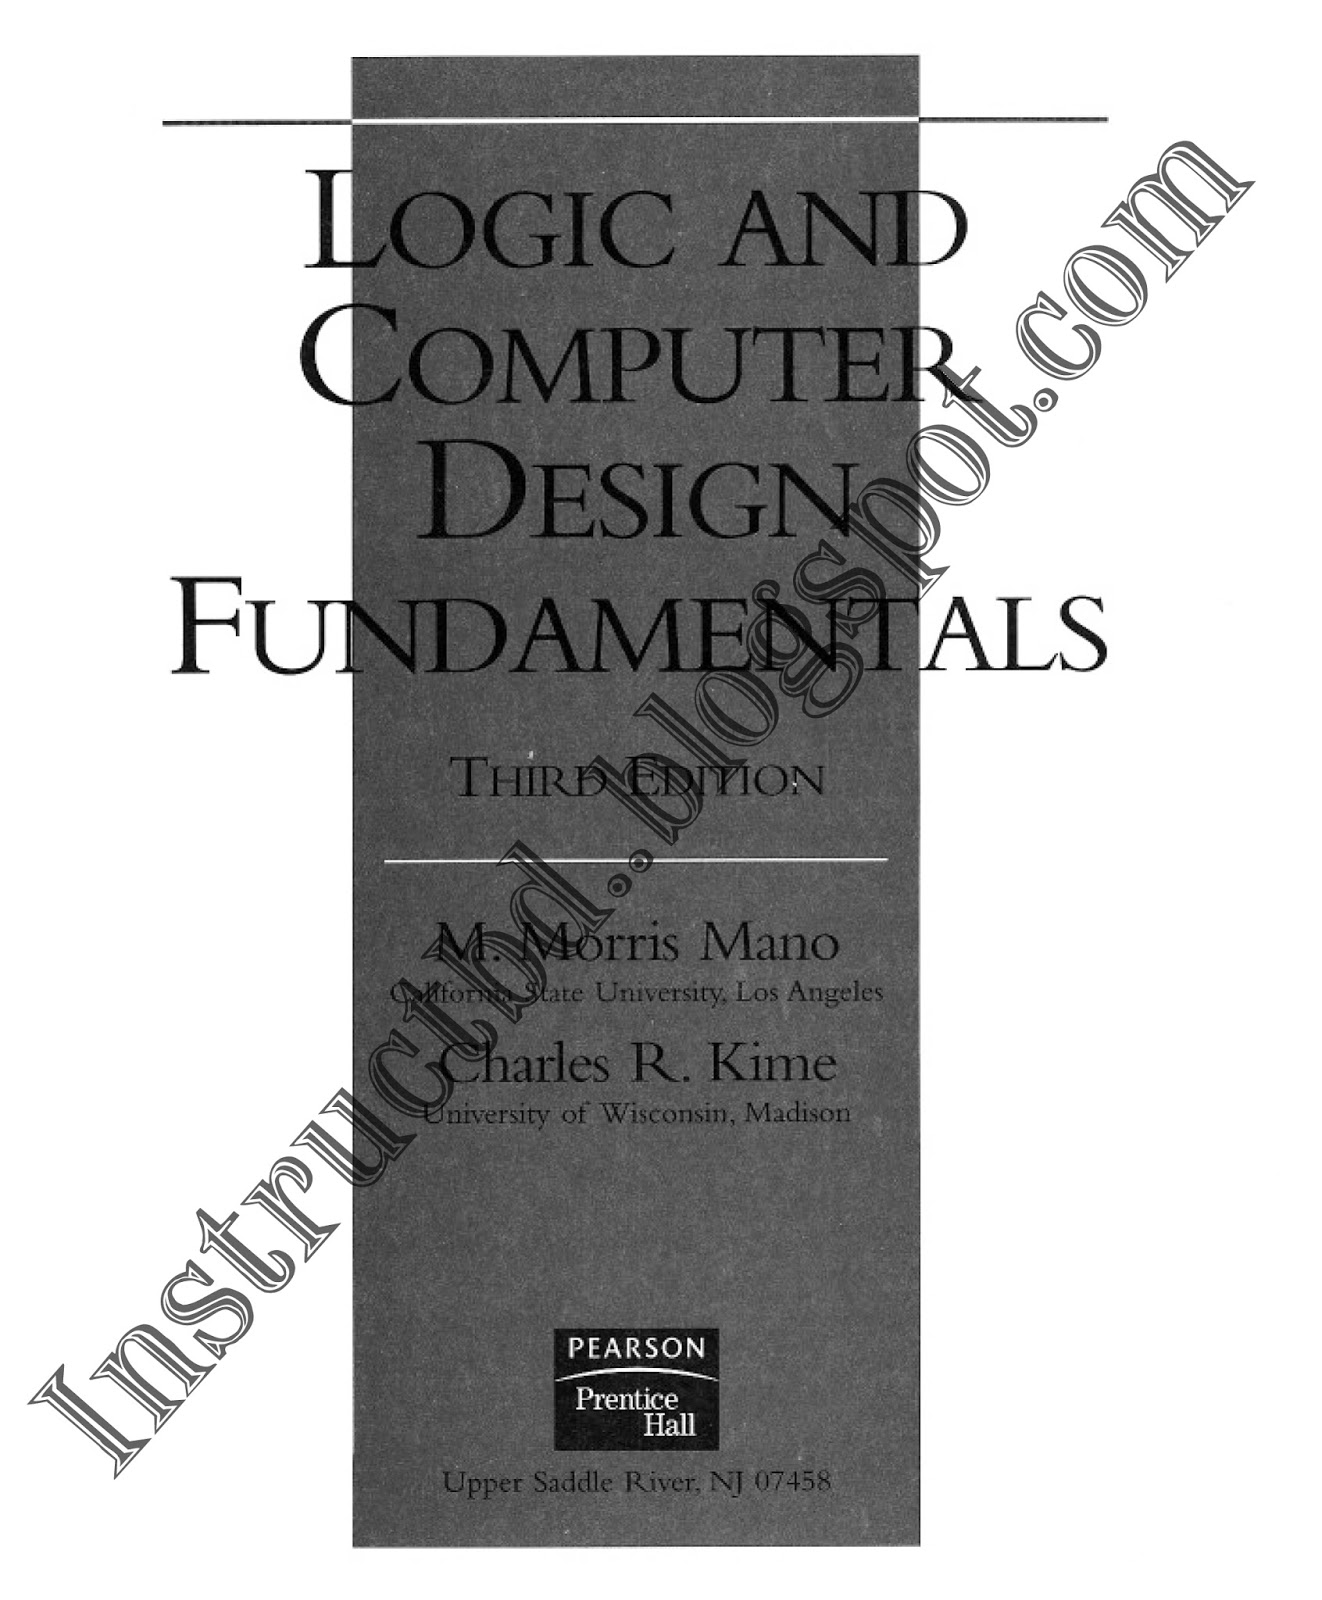 digital fundamentals 10th edition pdf download